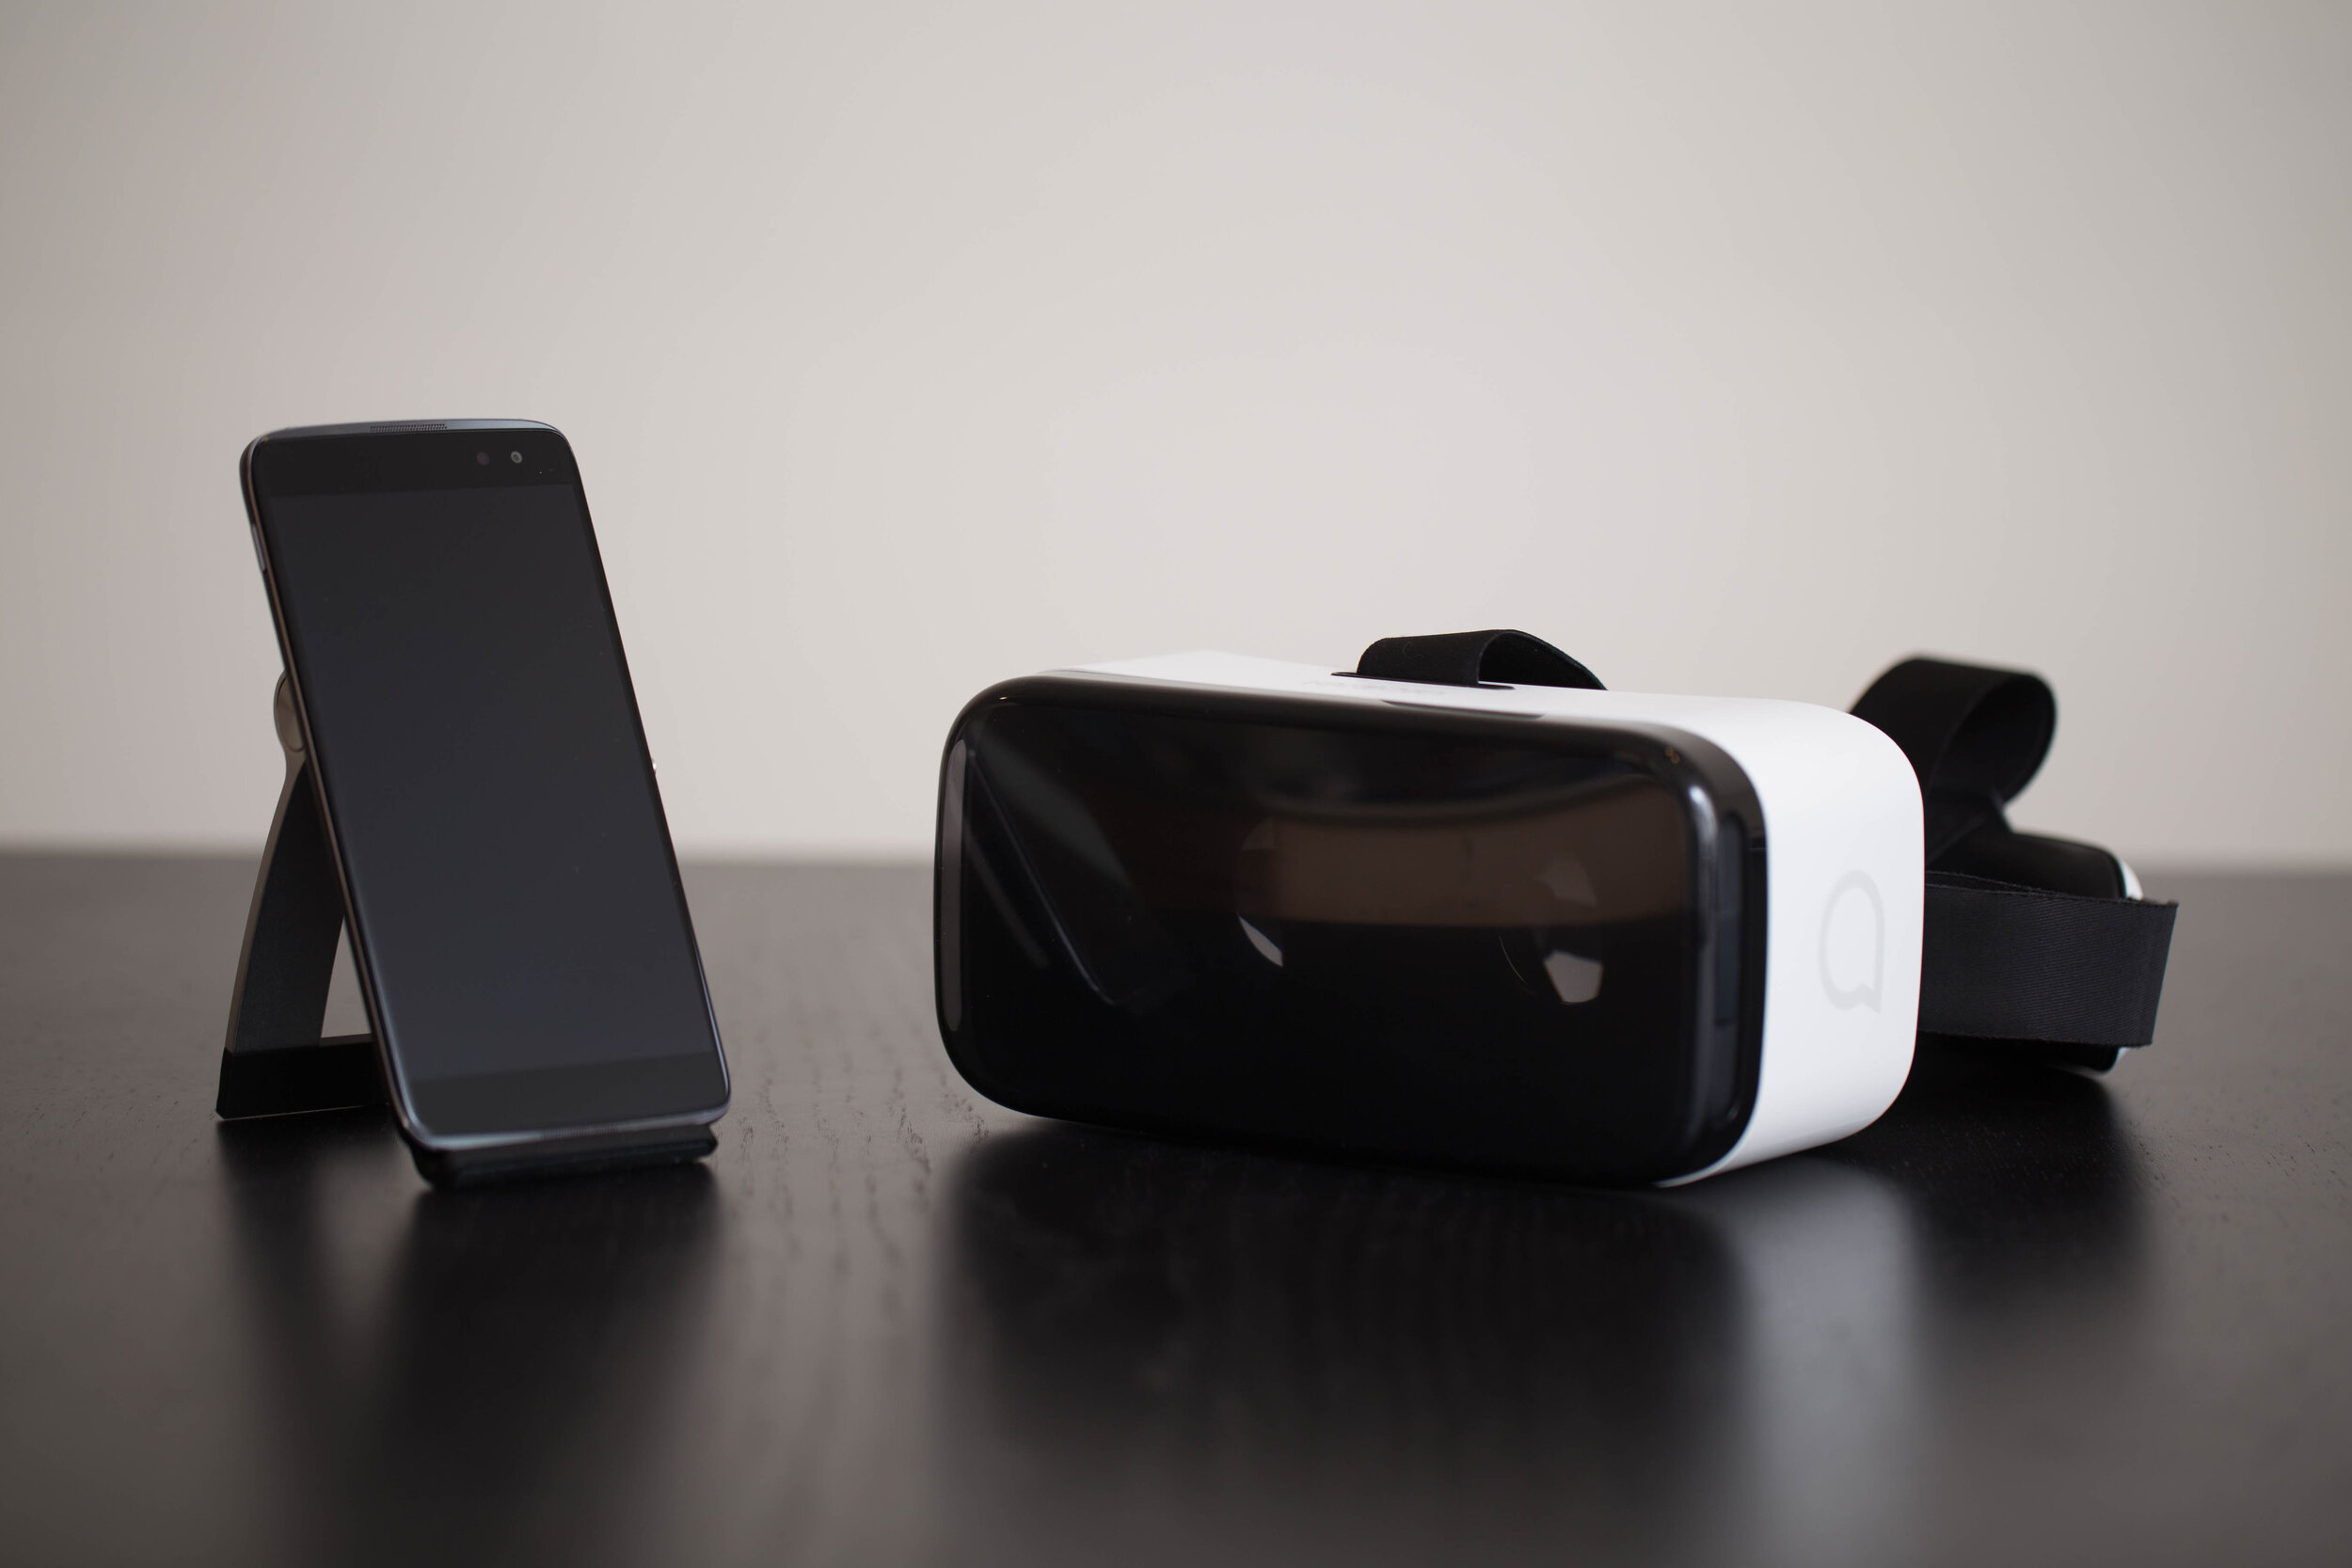 Alcatel Idol 4S - Smartphone &amp; VR Headset Bundle